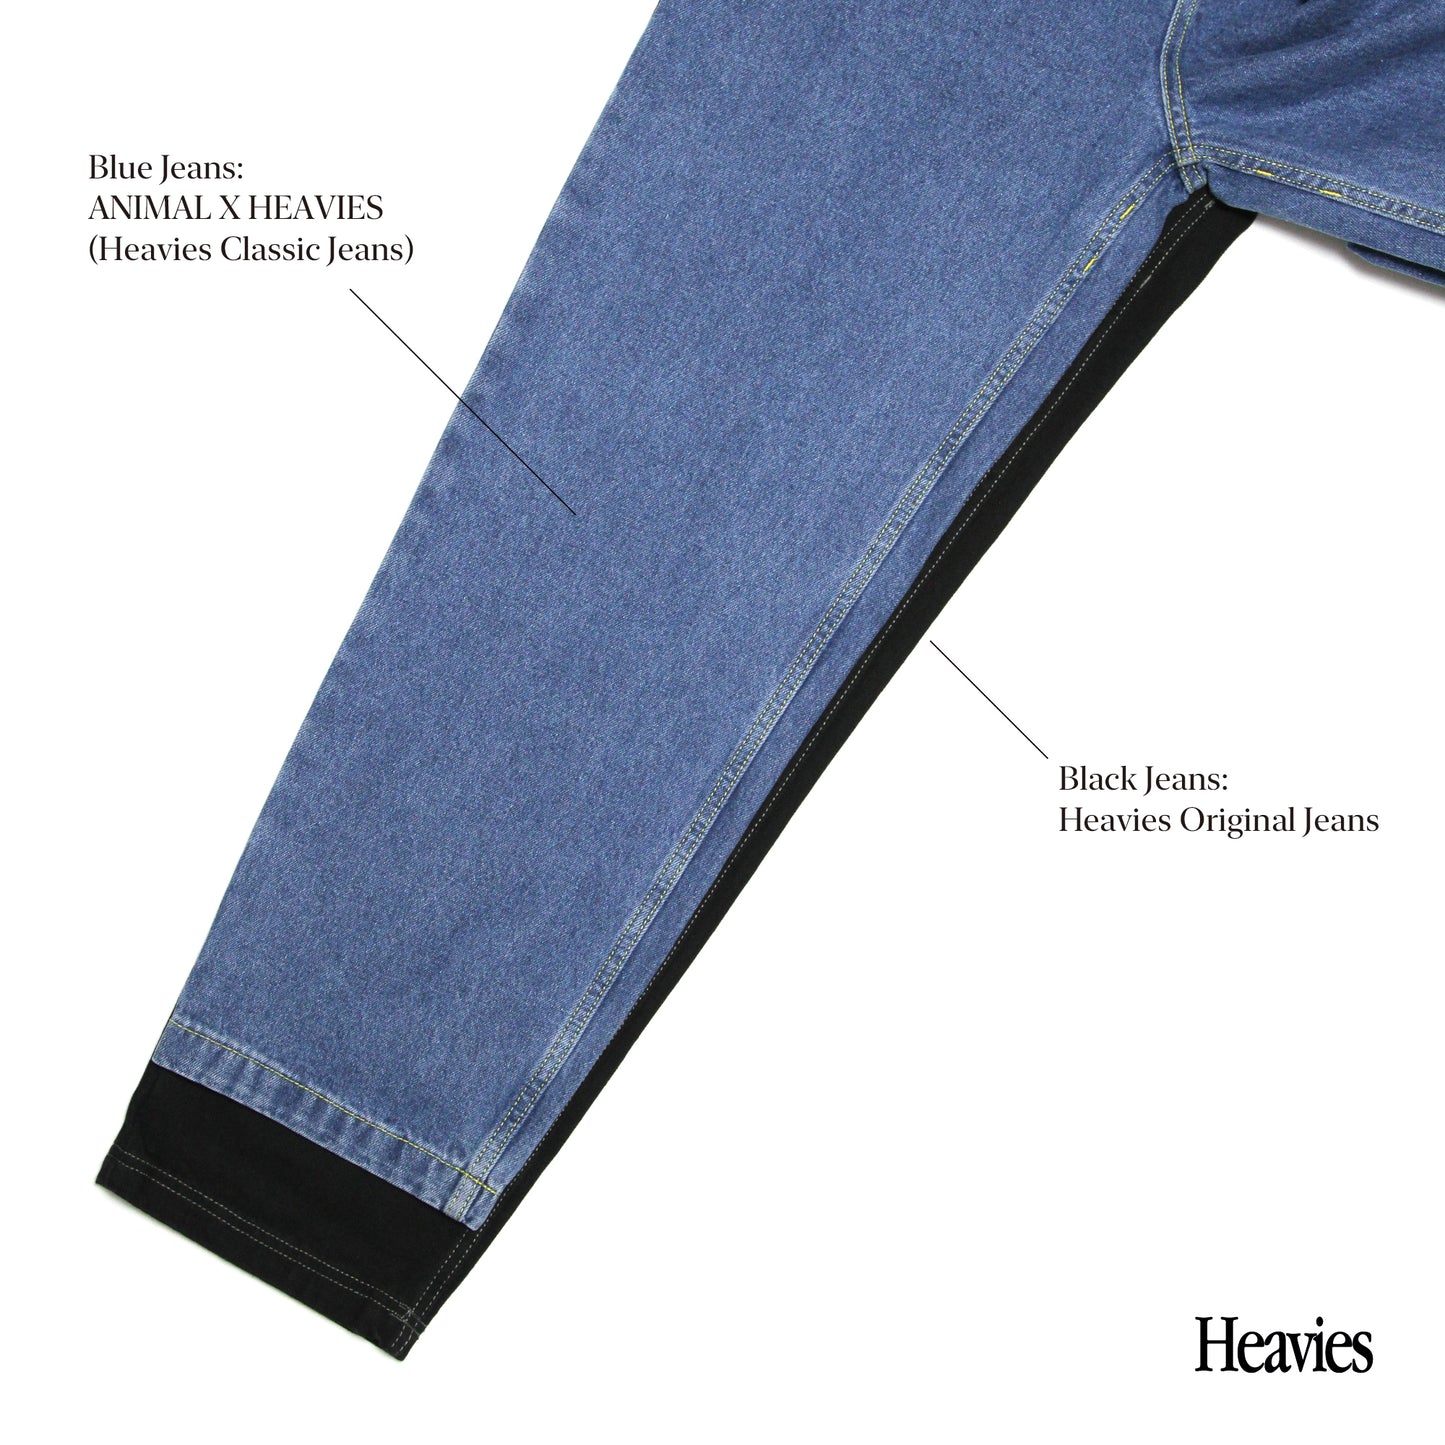 ANIMAL X HEAVIES - Classic Jeans/Blue